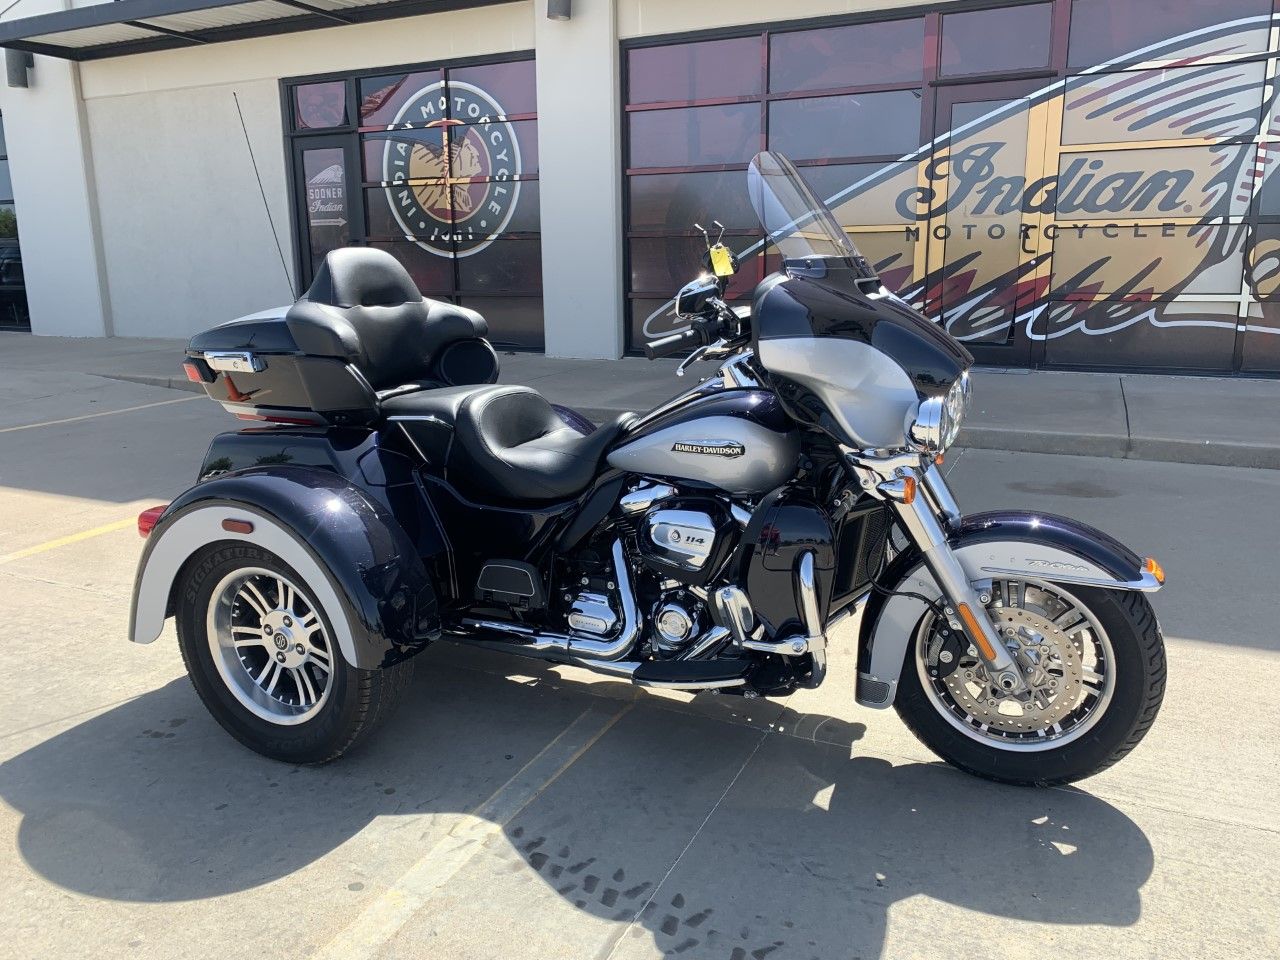 2019 Harley-Davidson Tri Glide® Ultra in Norman, Oklahoma - Photo 2